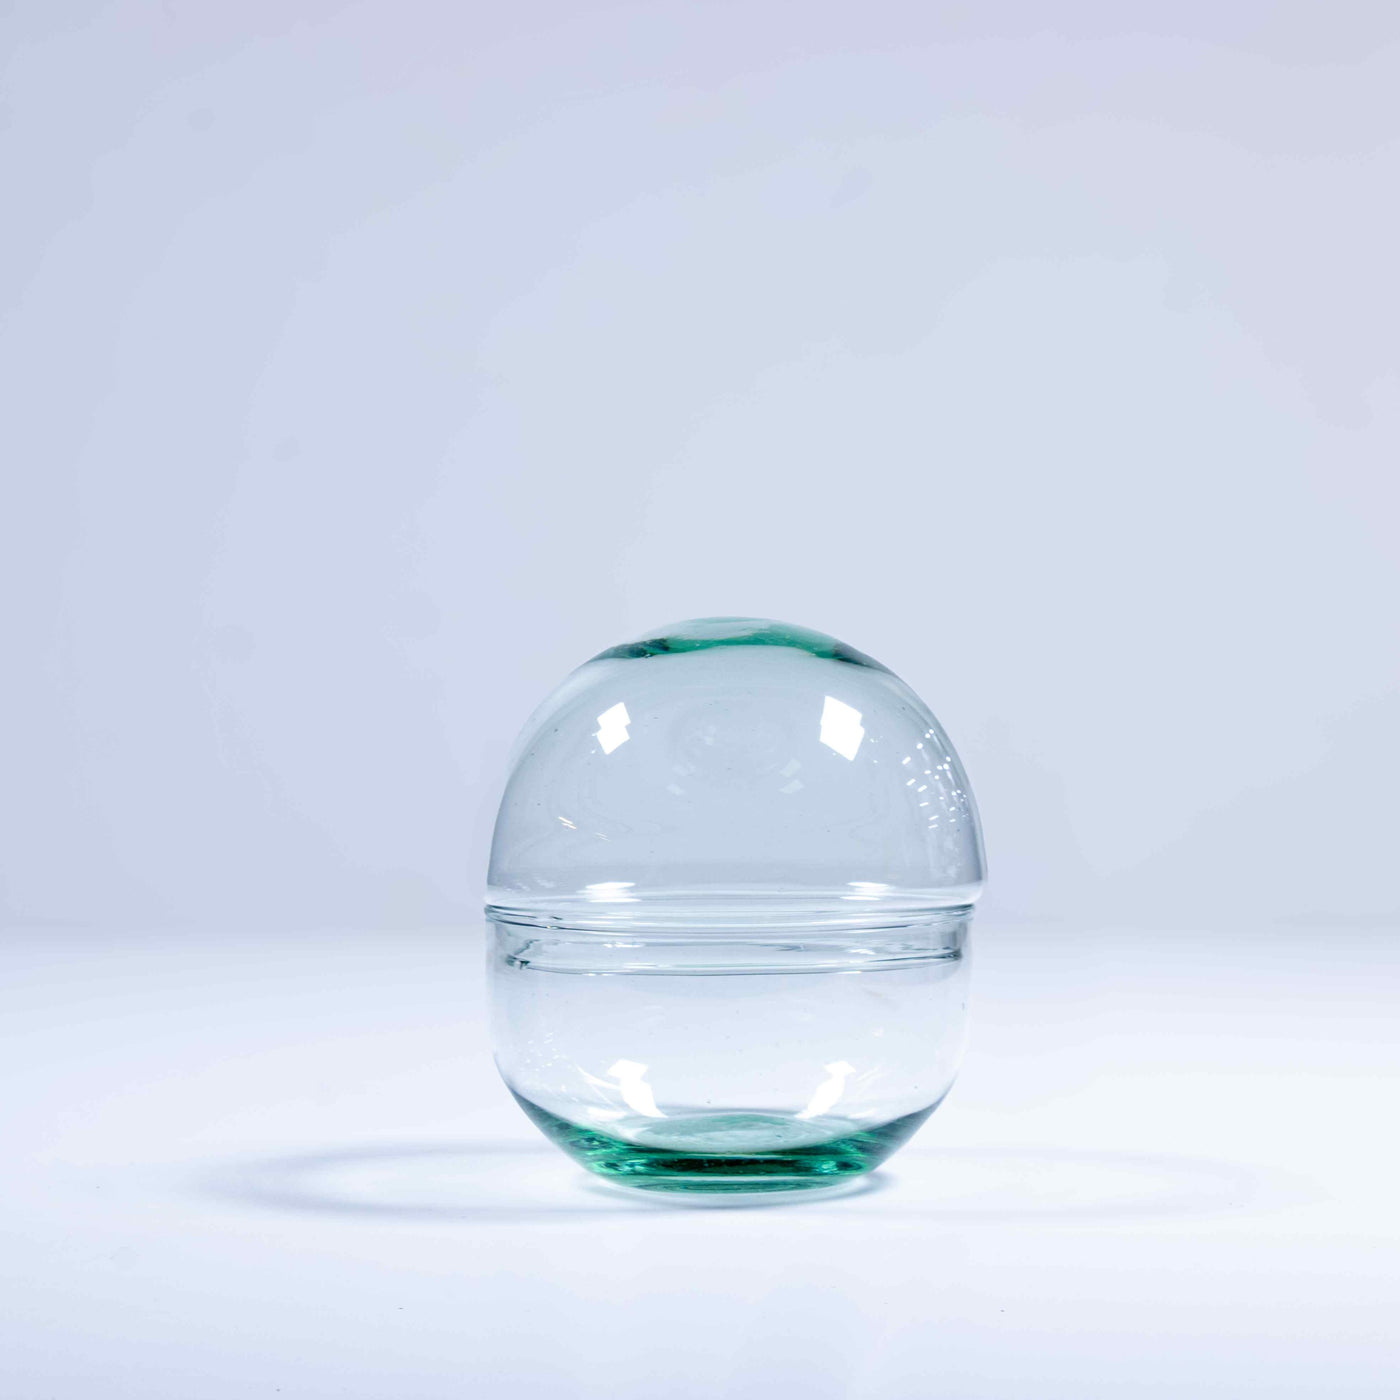 Handmade glassware orb/ball terrarium kits